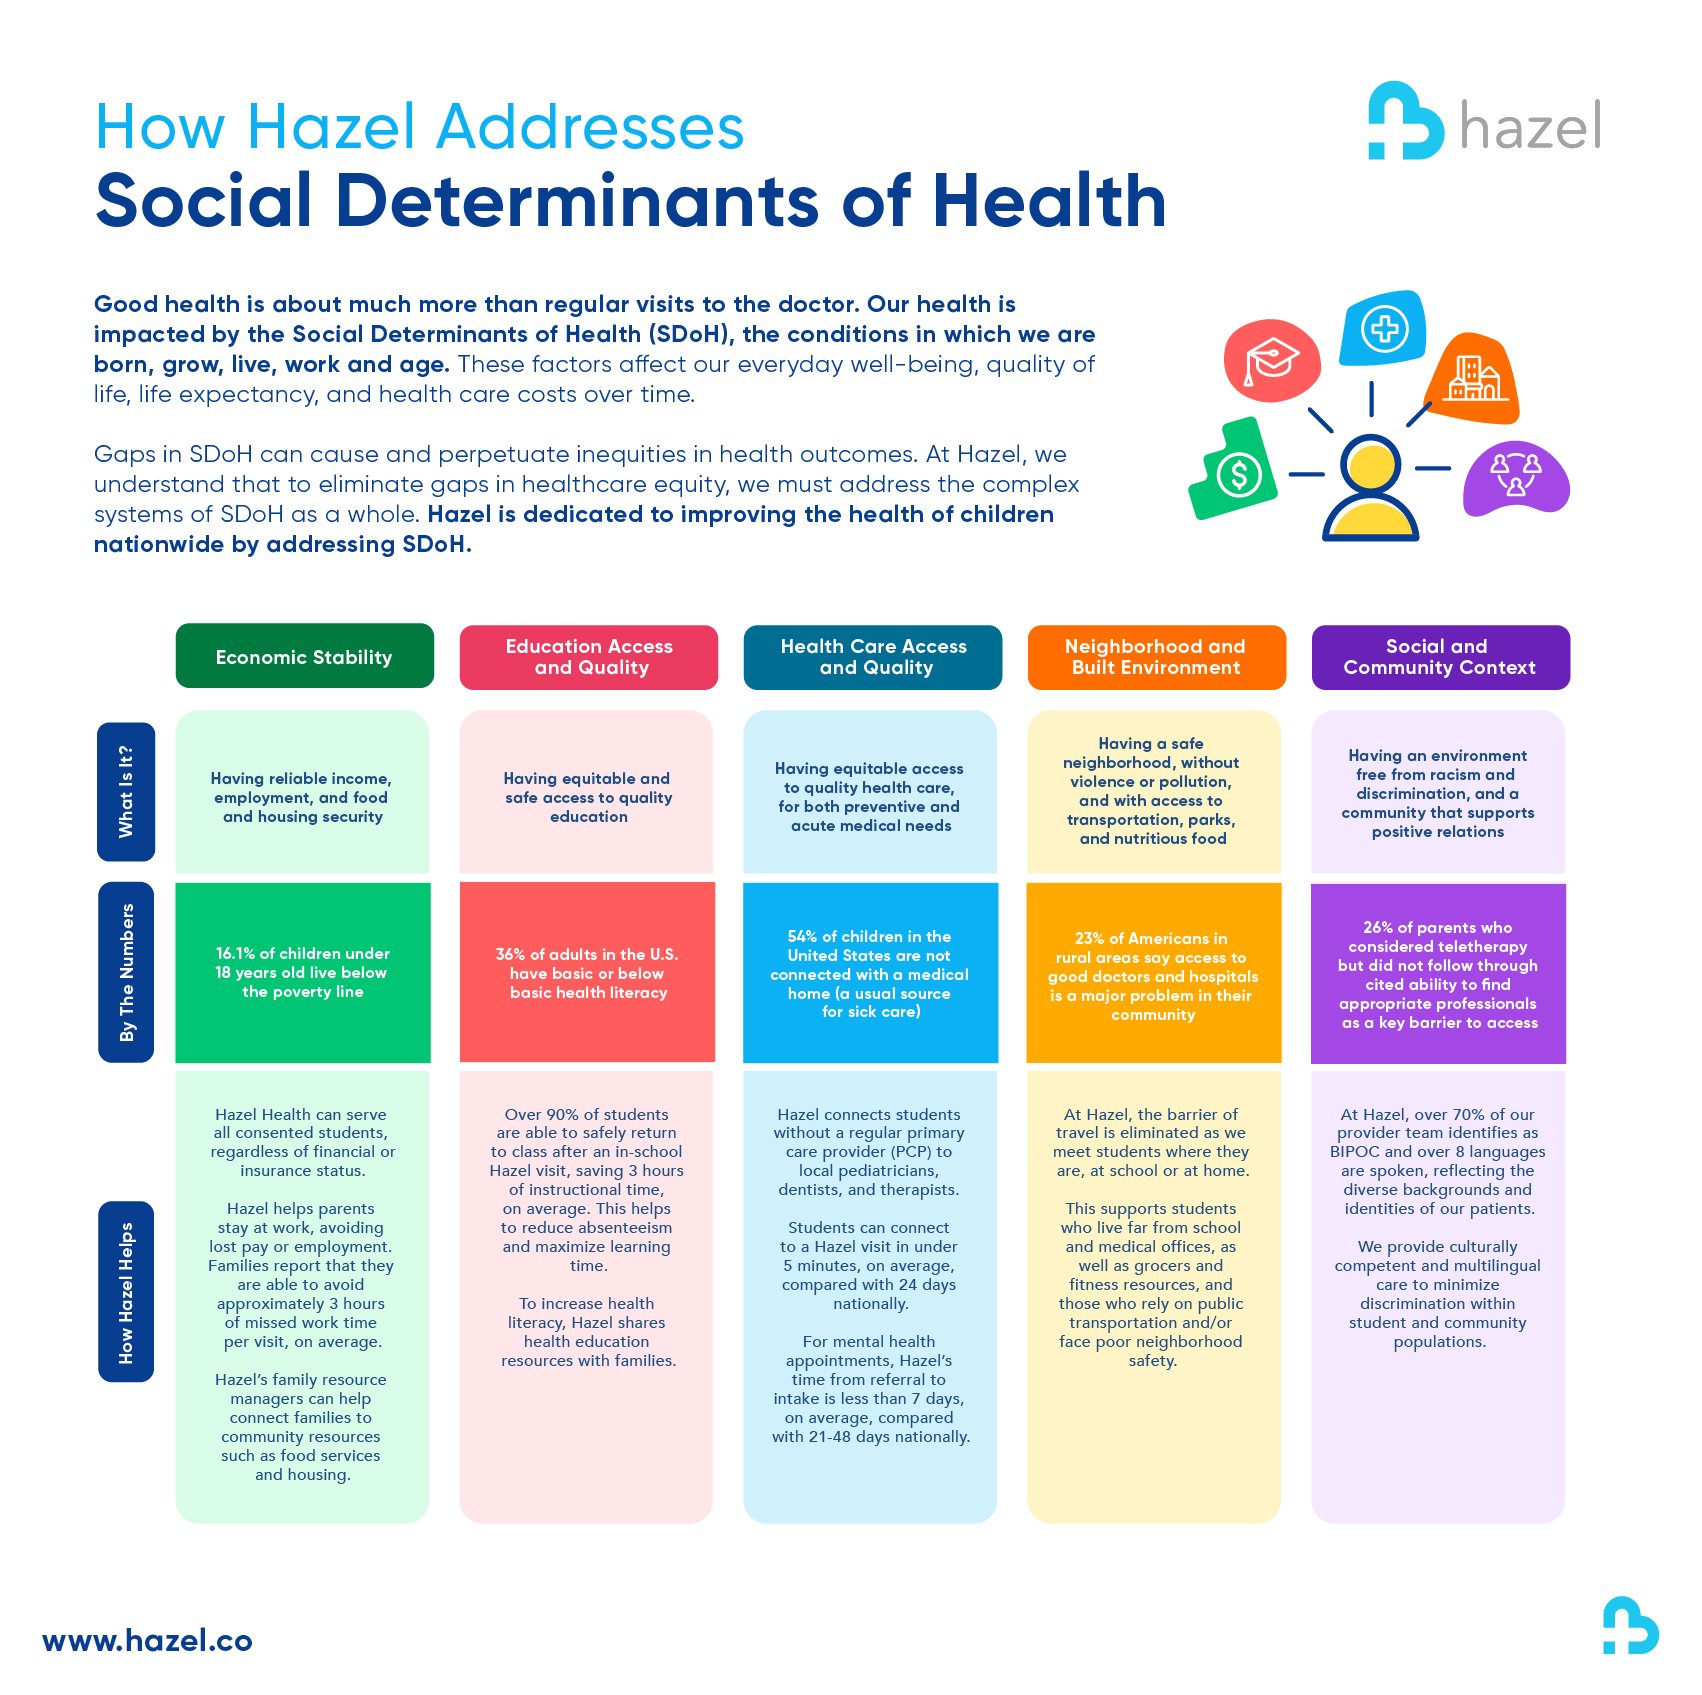 essay on social determinants of health